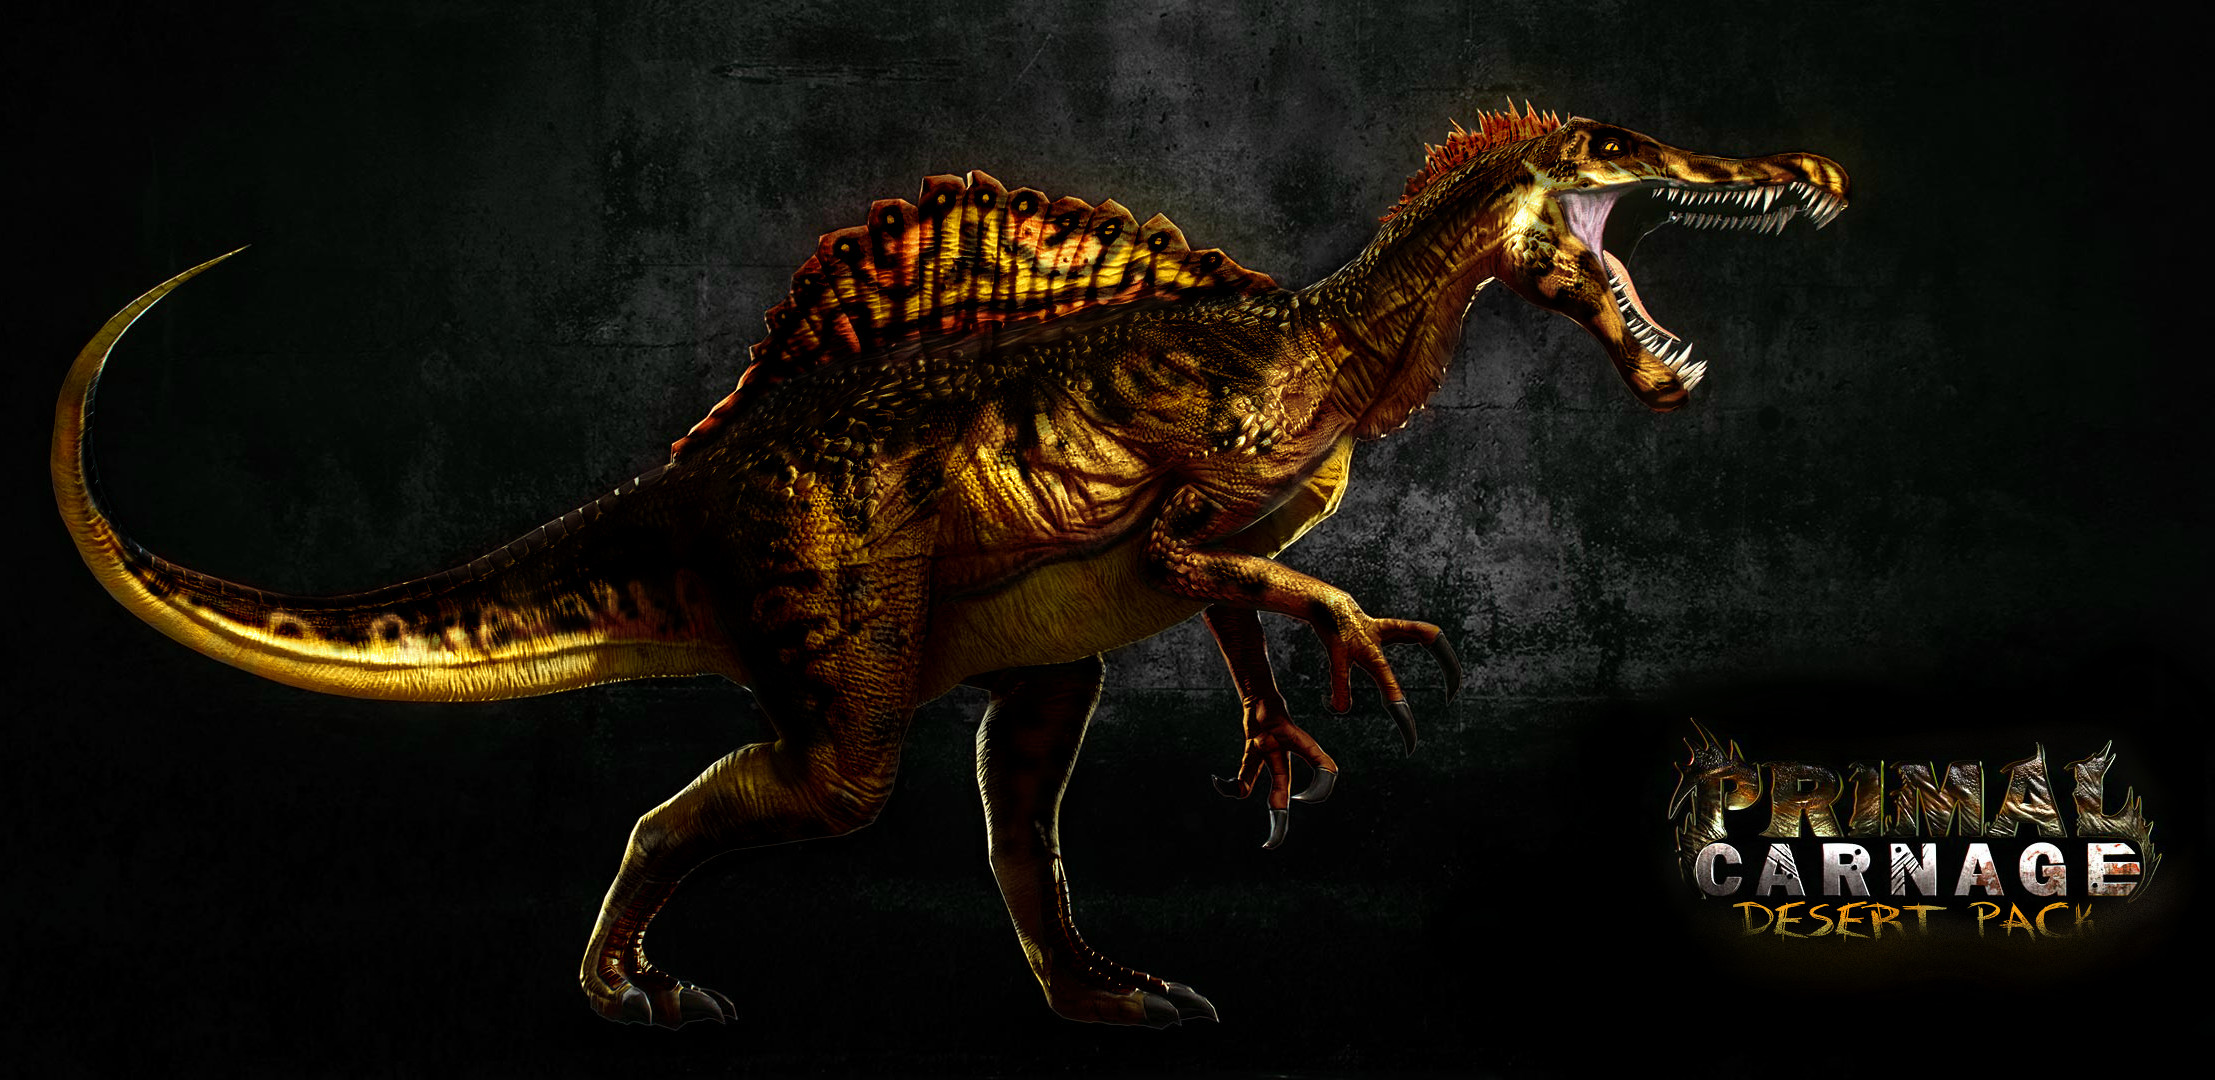 2215x1080 spinosaurus wallpaper - Google Search